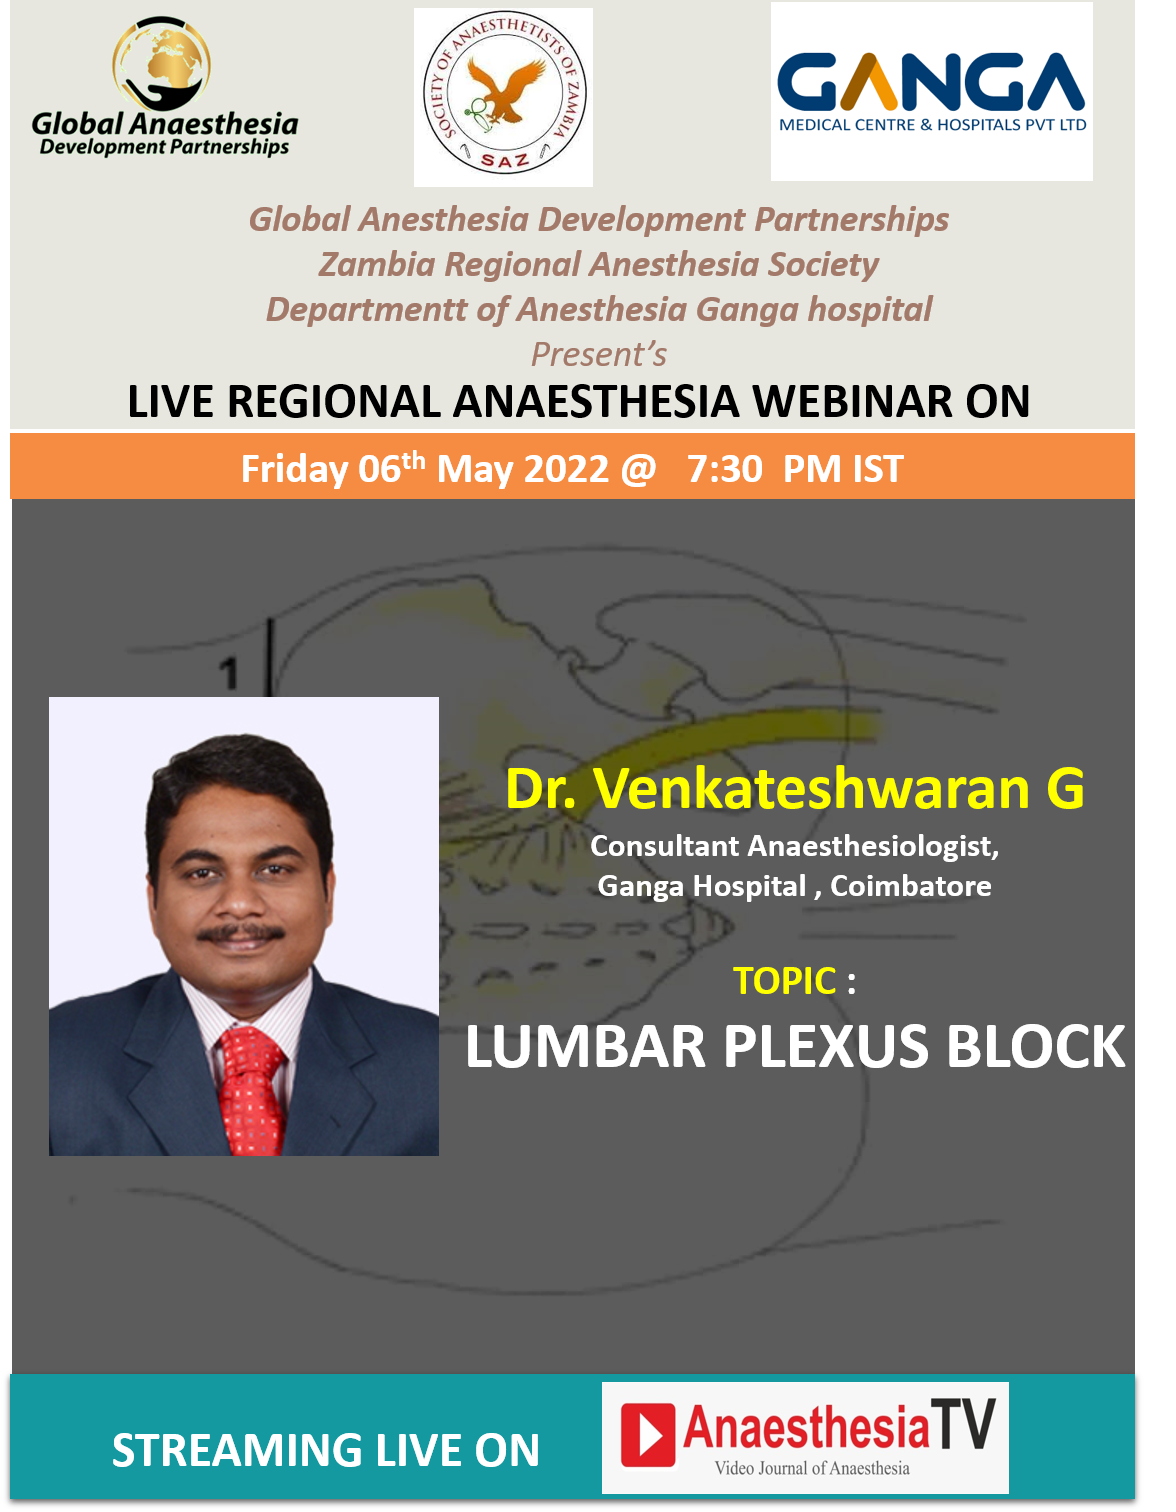 LUMBAR PLEXUS BLOCK by Dr. Venkateshwaran G (Consultant Anesthesiologist, Ganga hospital, India)